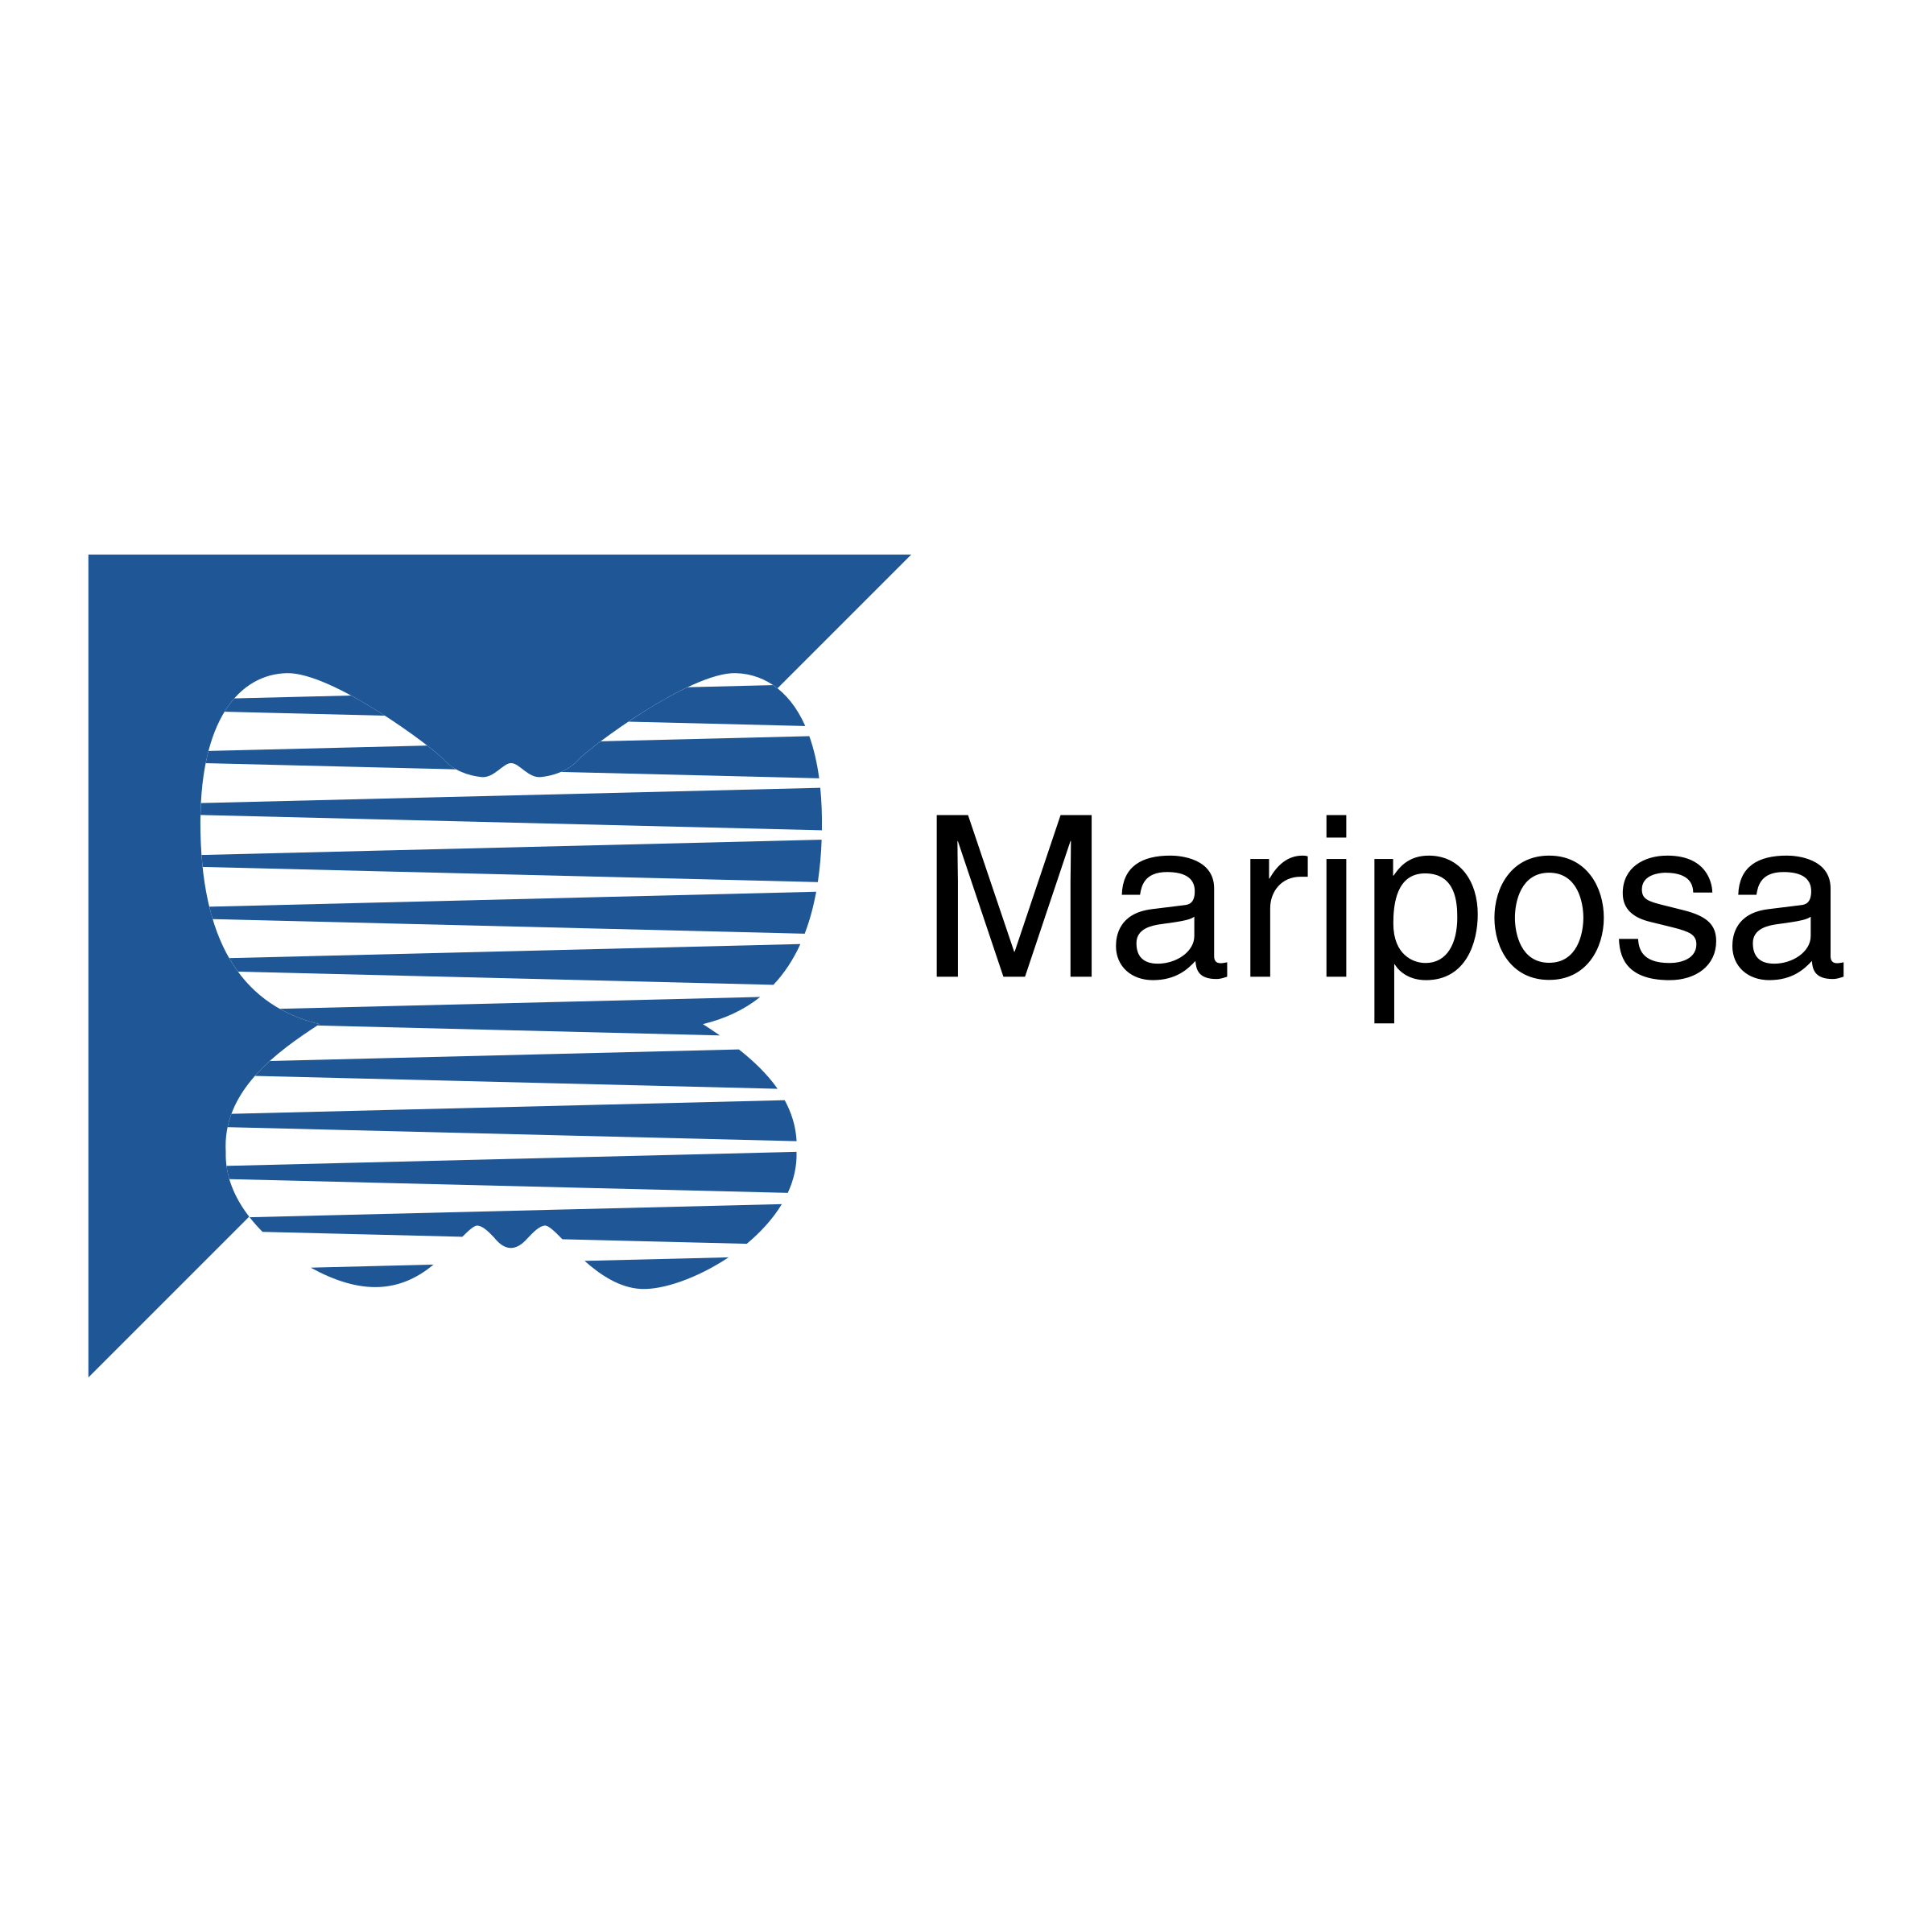 Mariposa Logo - Mariposa Logo PNG Transparent & SVG Vector - Freebie Supply